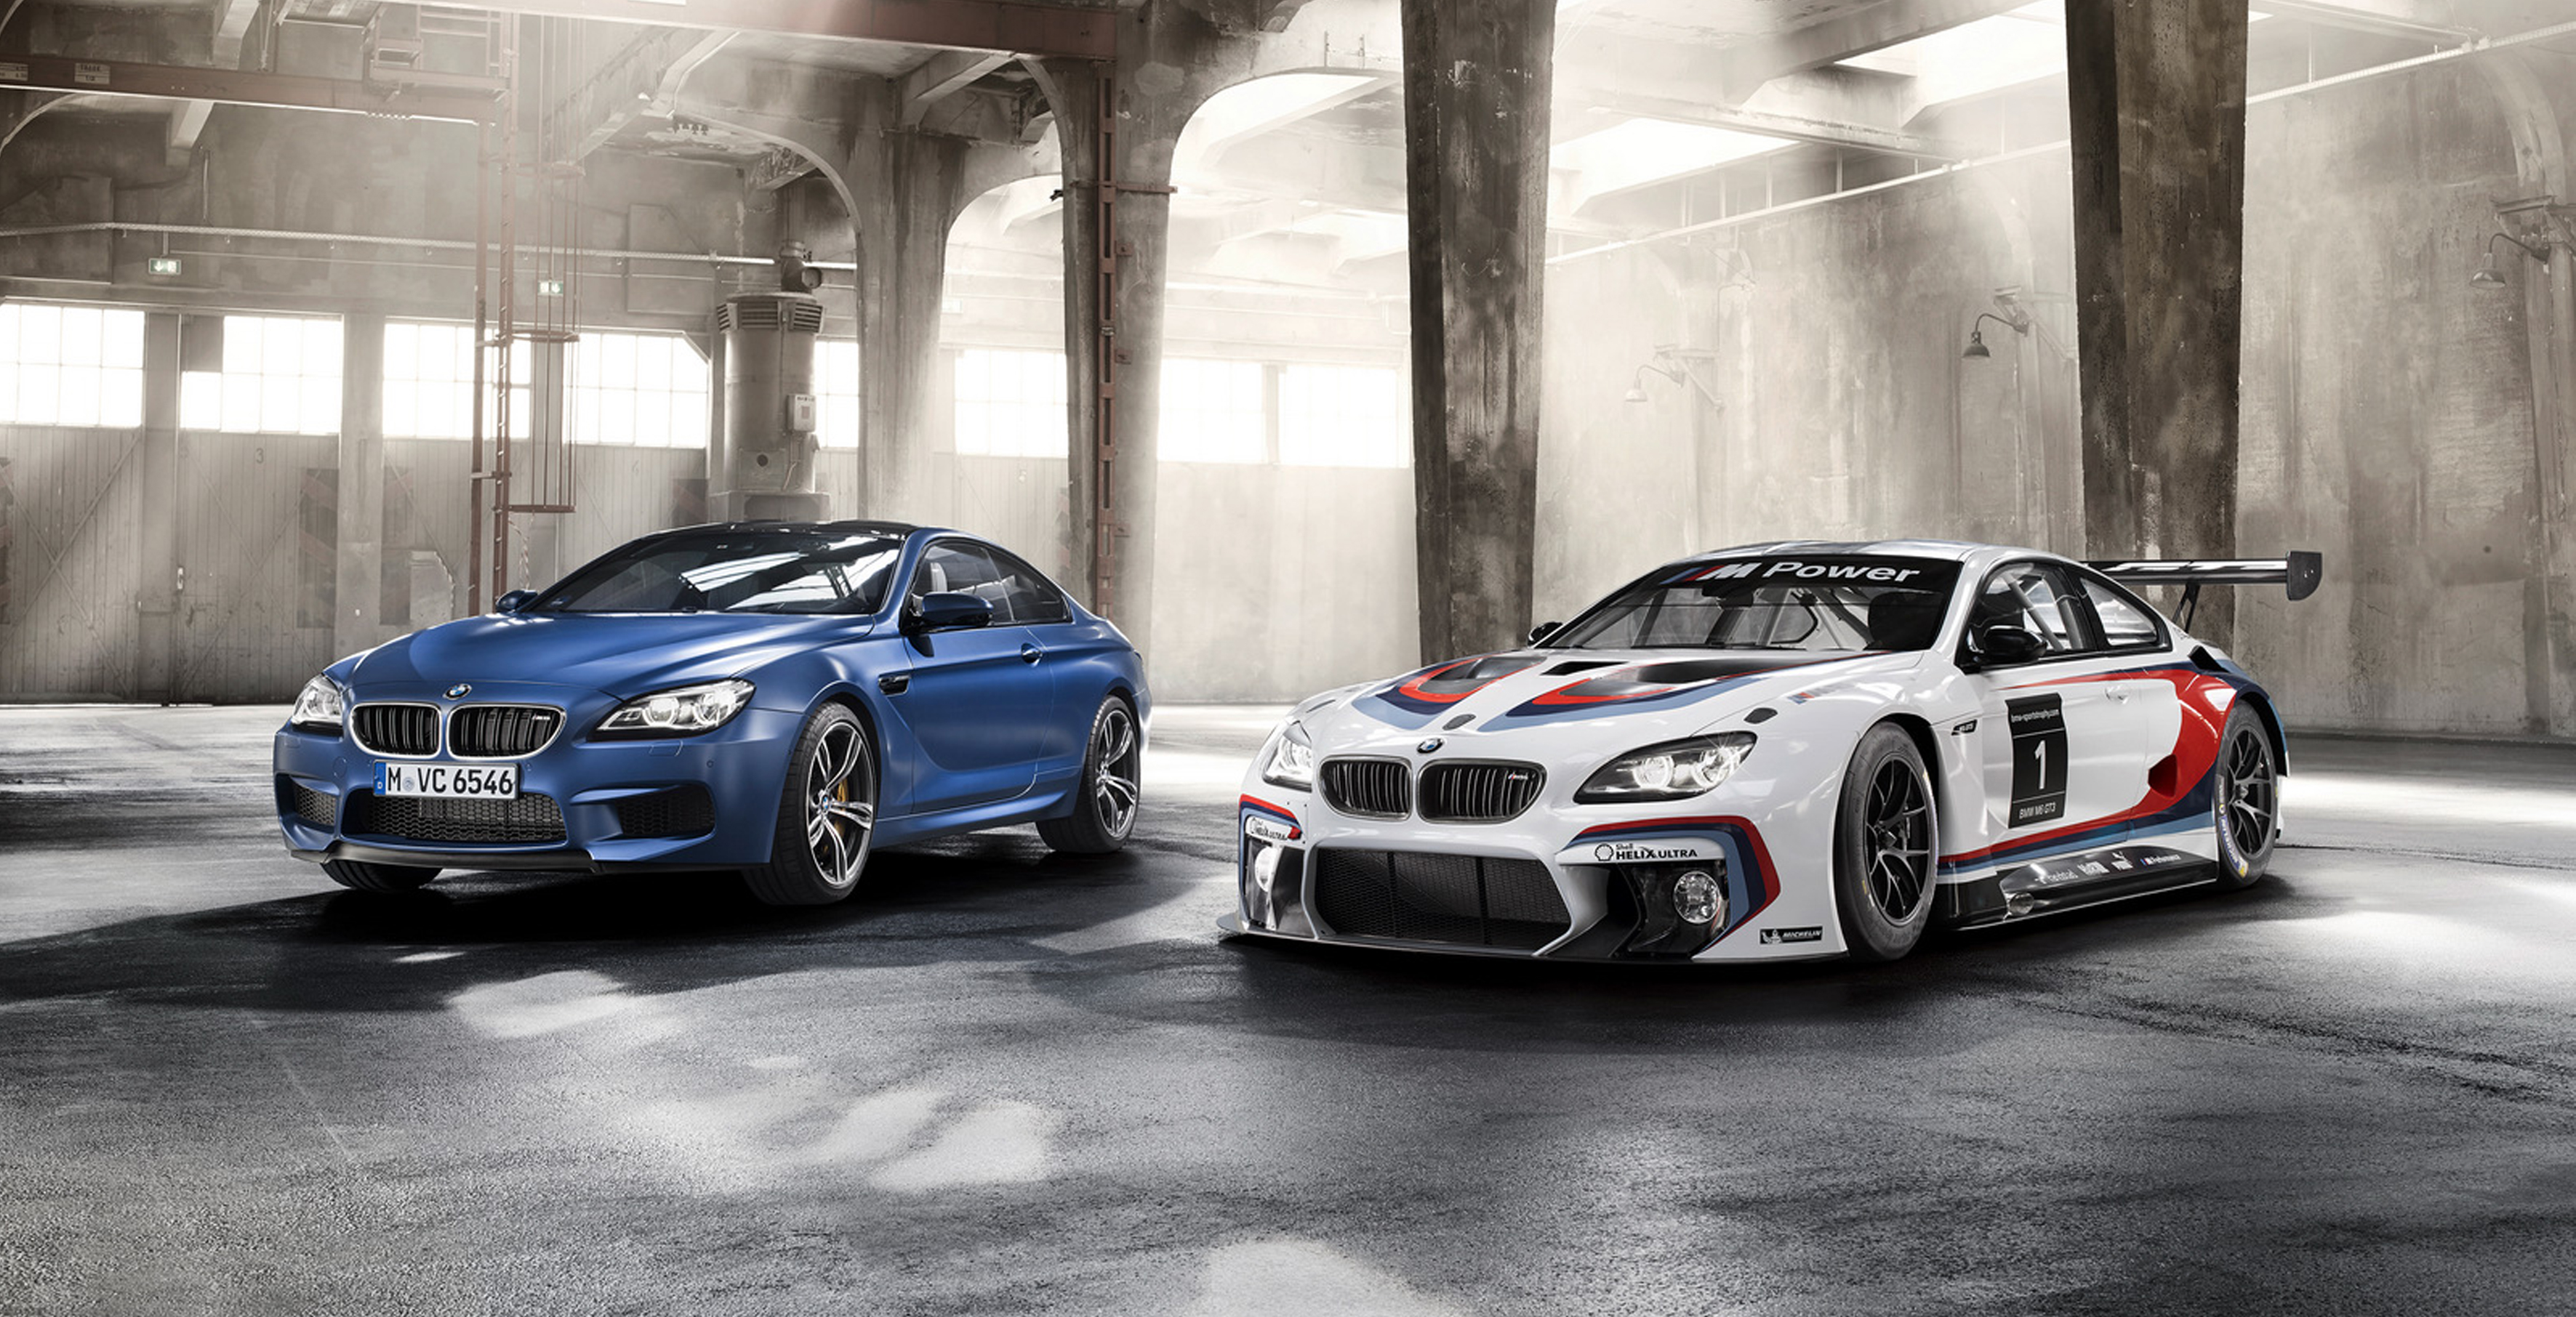 BMW M6 GT3 Backgrounds, Compatible - PC, Mobile, Gadgets| 3543x1812 px